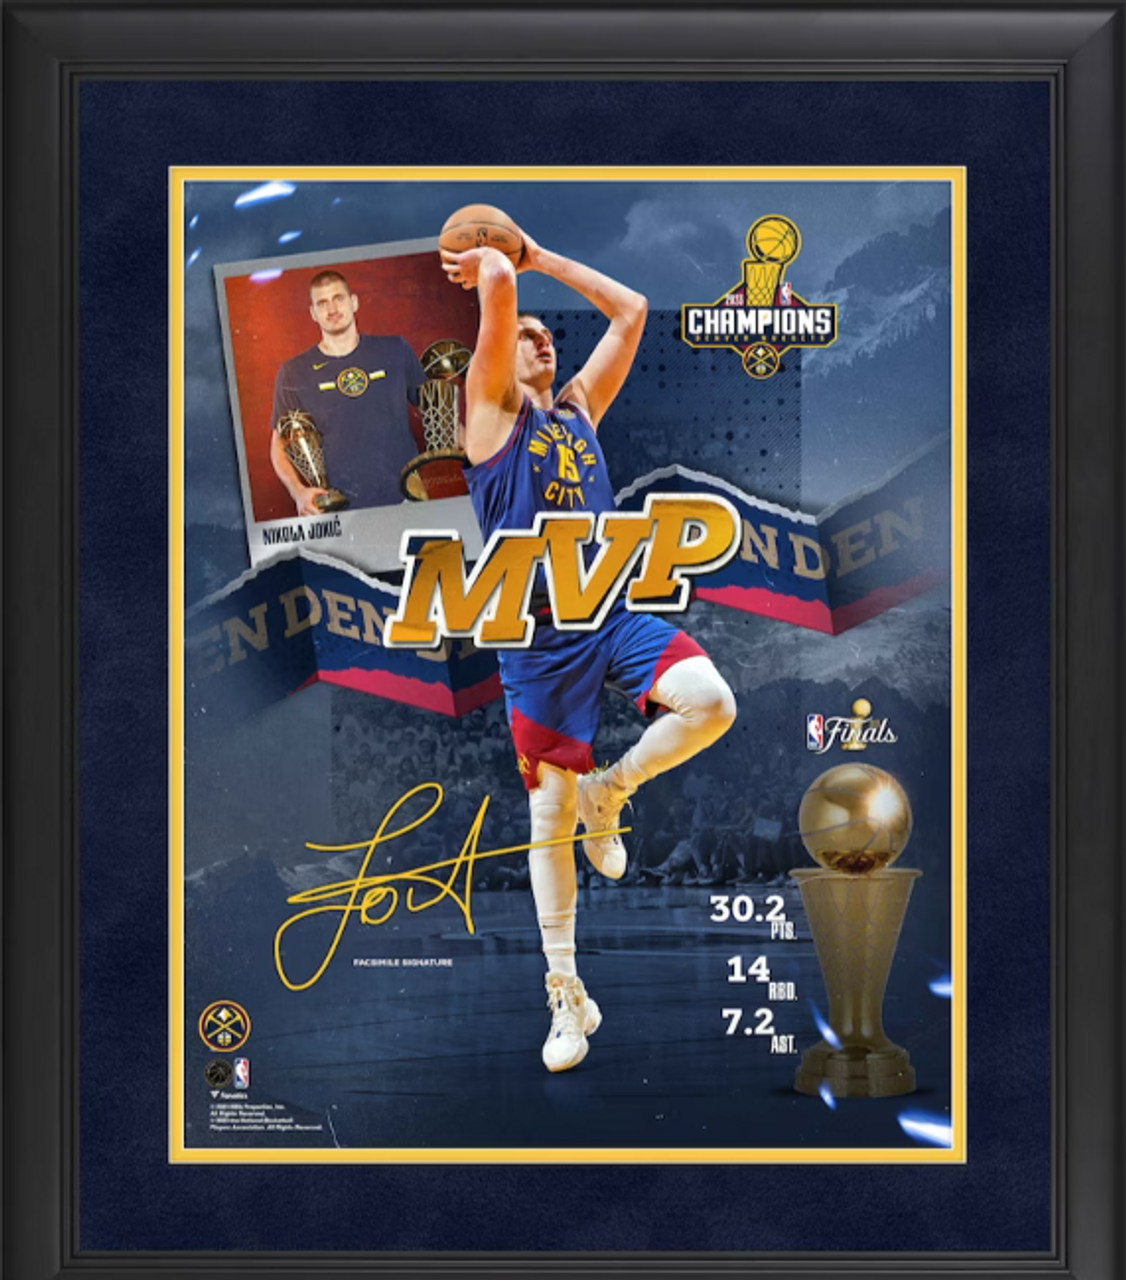 Nikola Jokic NBA Finals 2023 MVP Home Decor Poster Canvas - Mugteeco